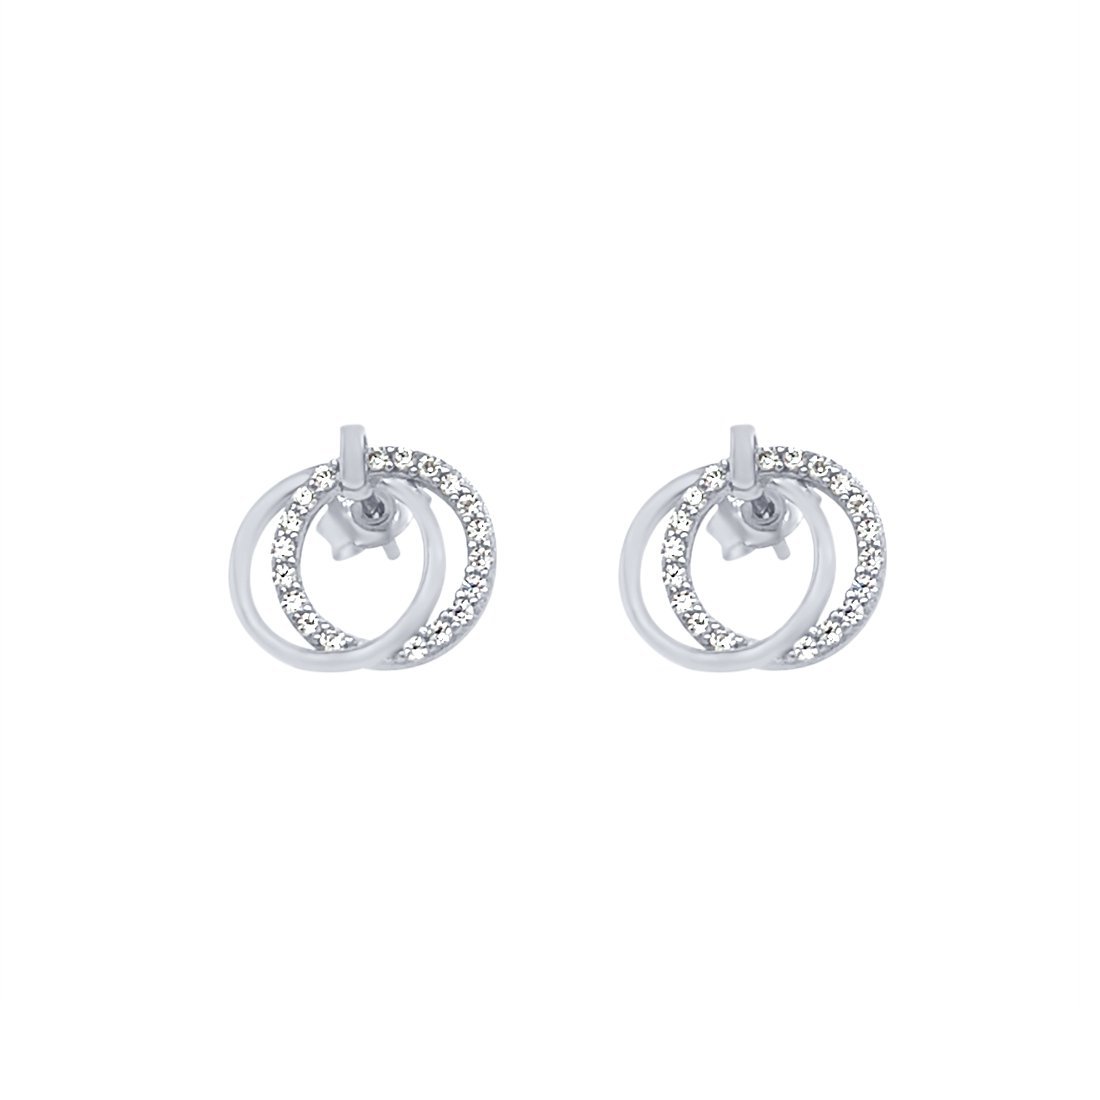 Double Open Circle Stud Earrings with Cubic Zirconia in Sterling Silver Earrings Bevilles 